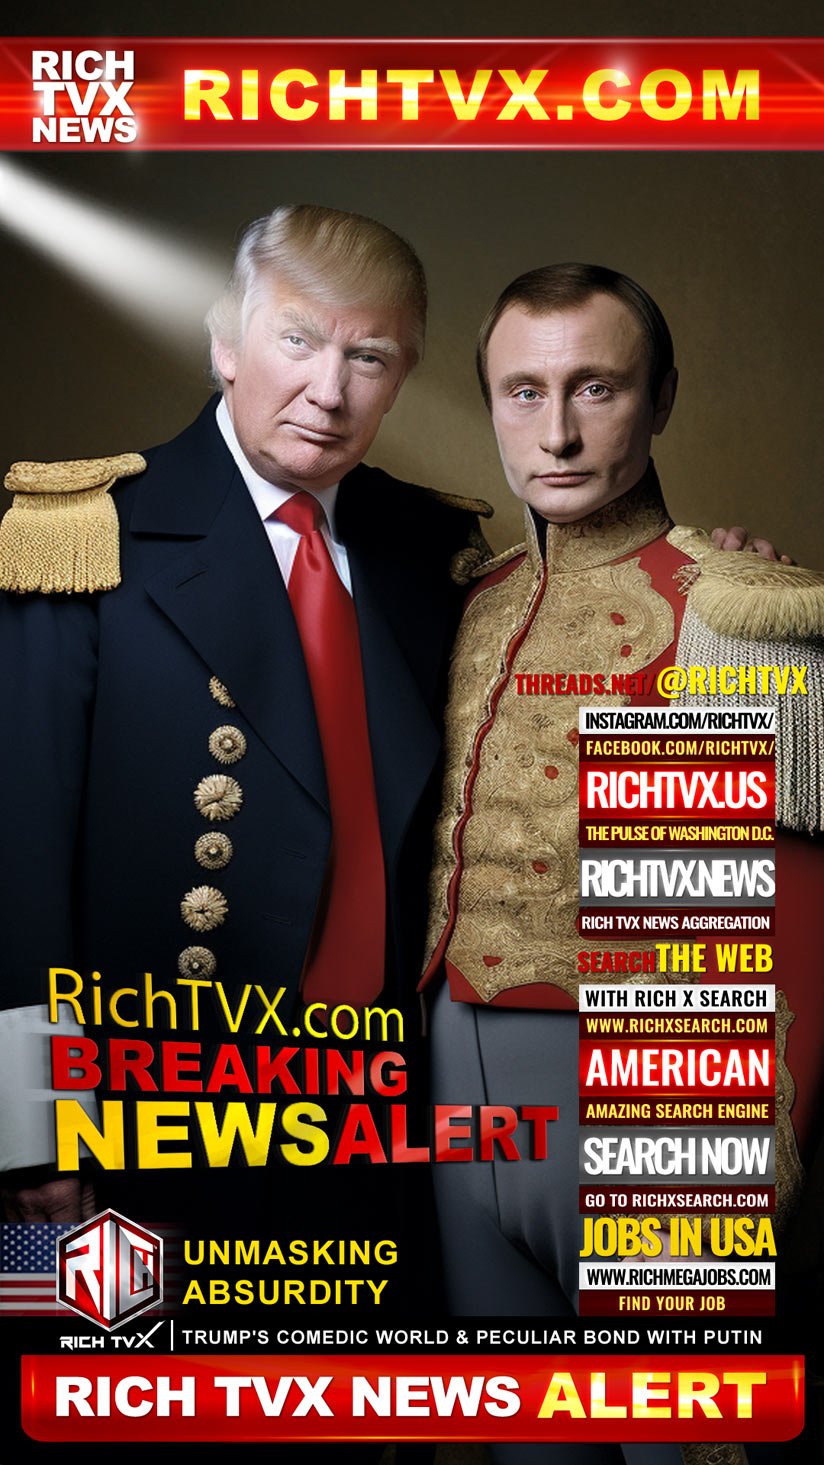 Unmasking Absurdity: Donald Trump’s Comedic World & Peculiar Bond with Vladimir Putin